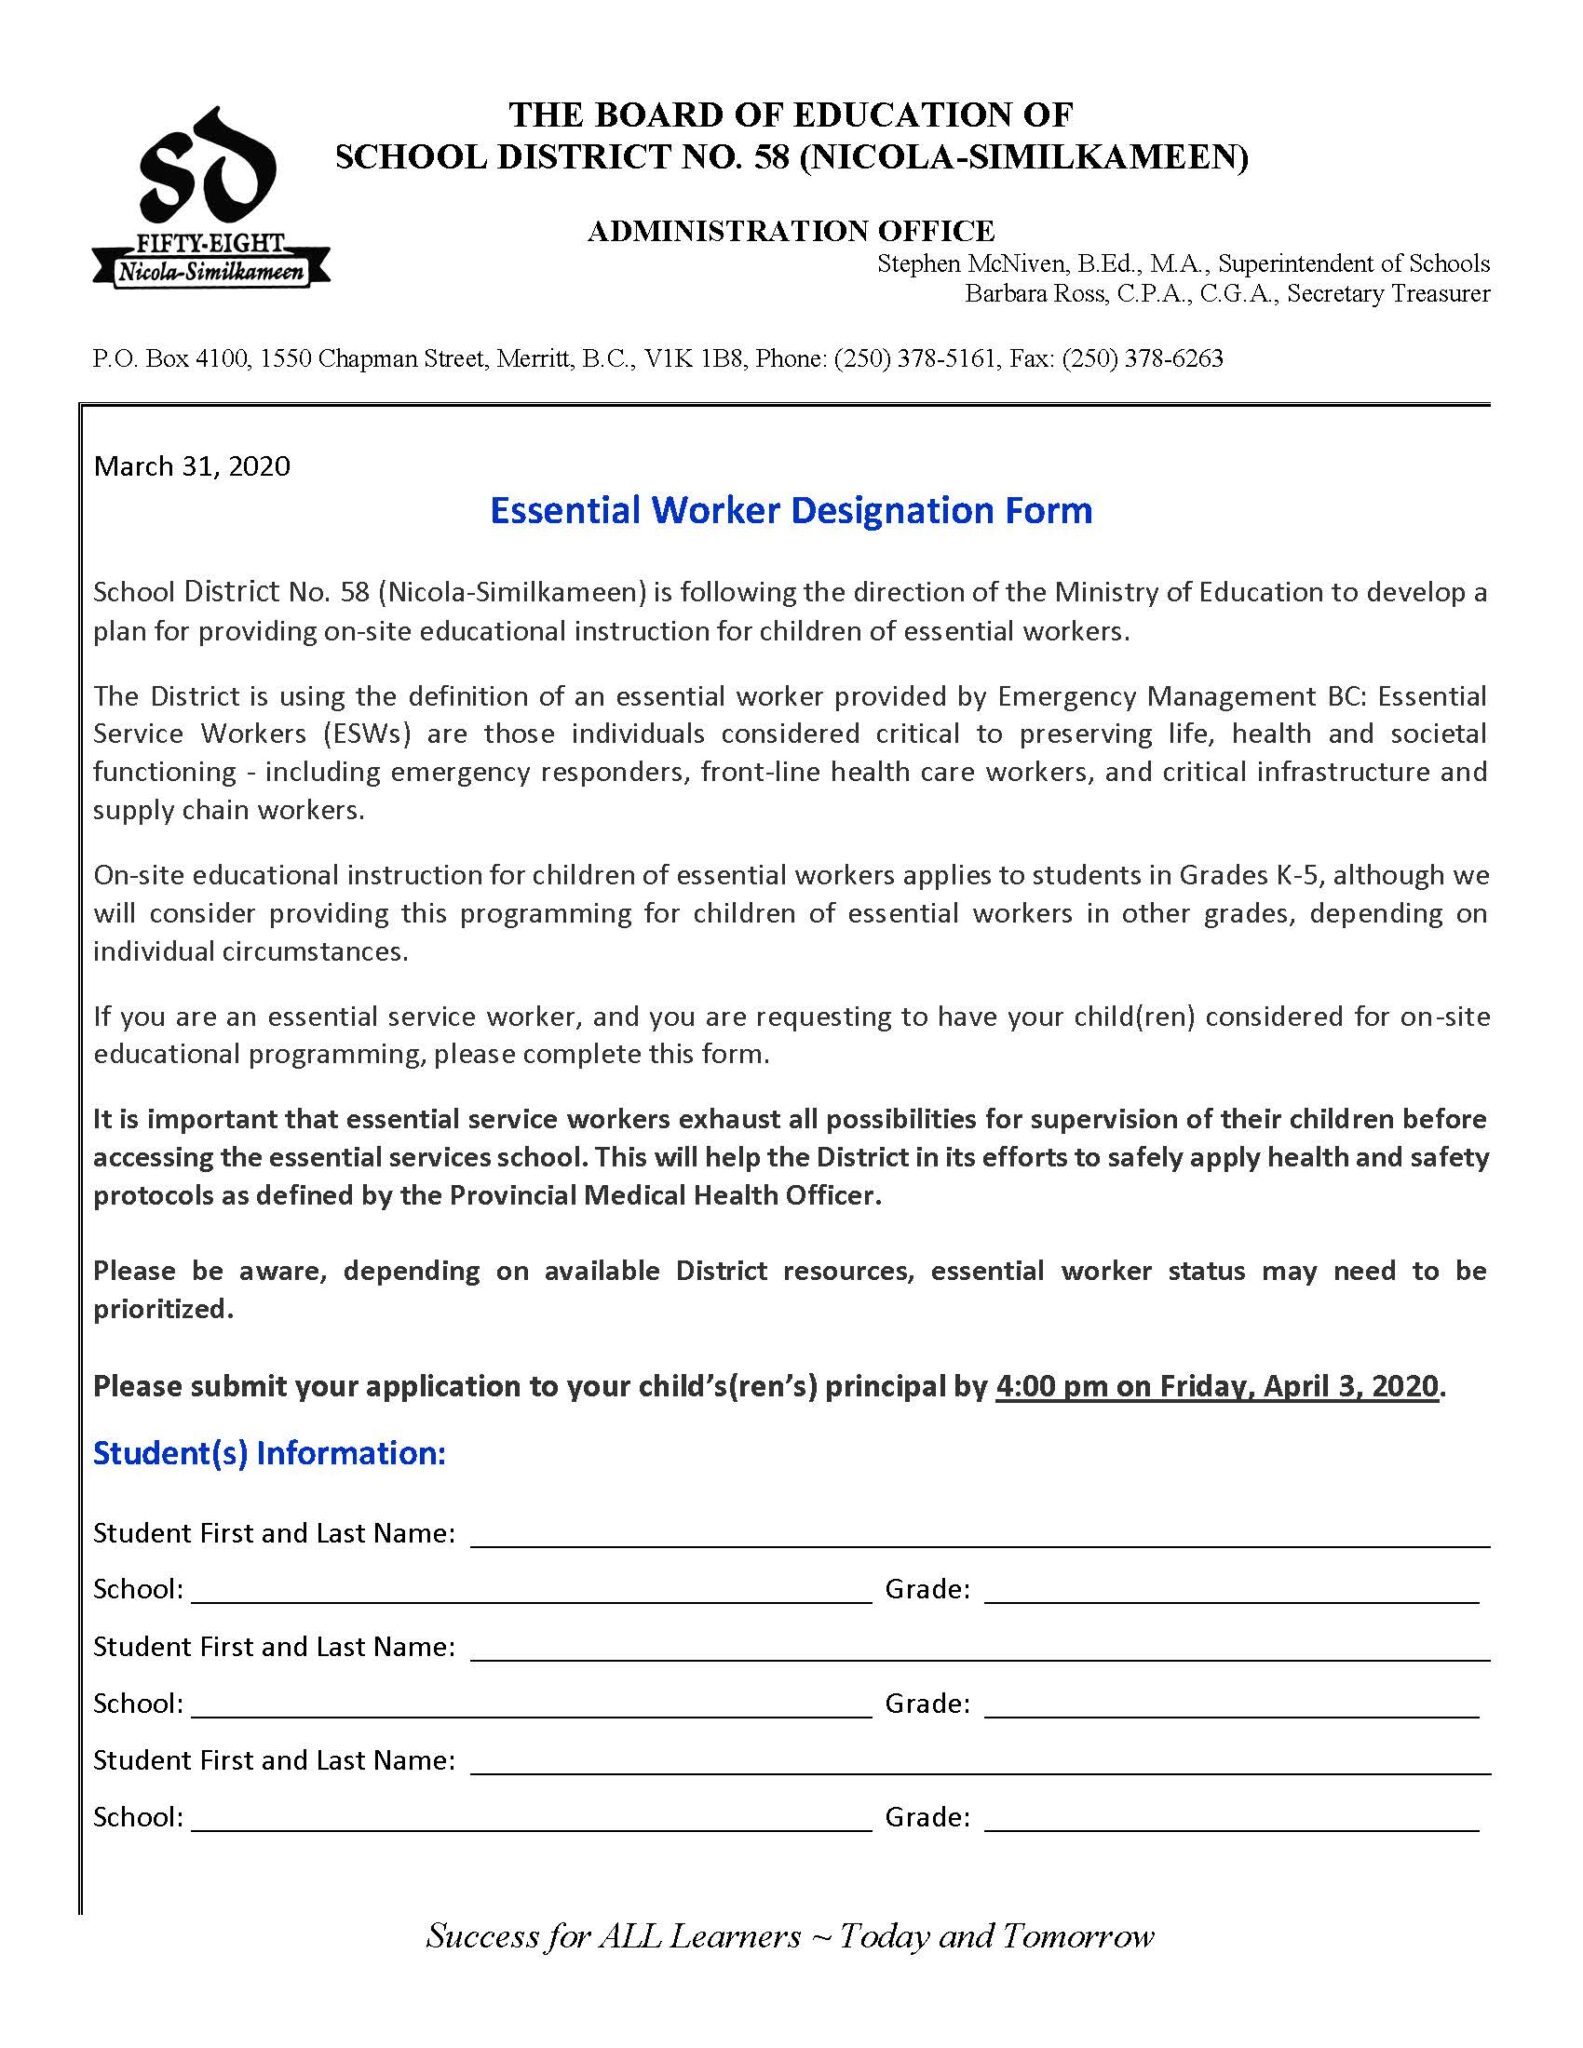 Essential Worker Application Form SD No. 58 (NicolaSimilkameen)